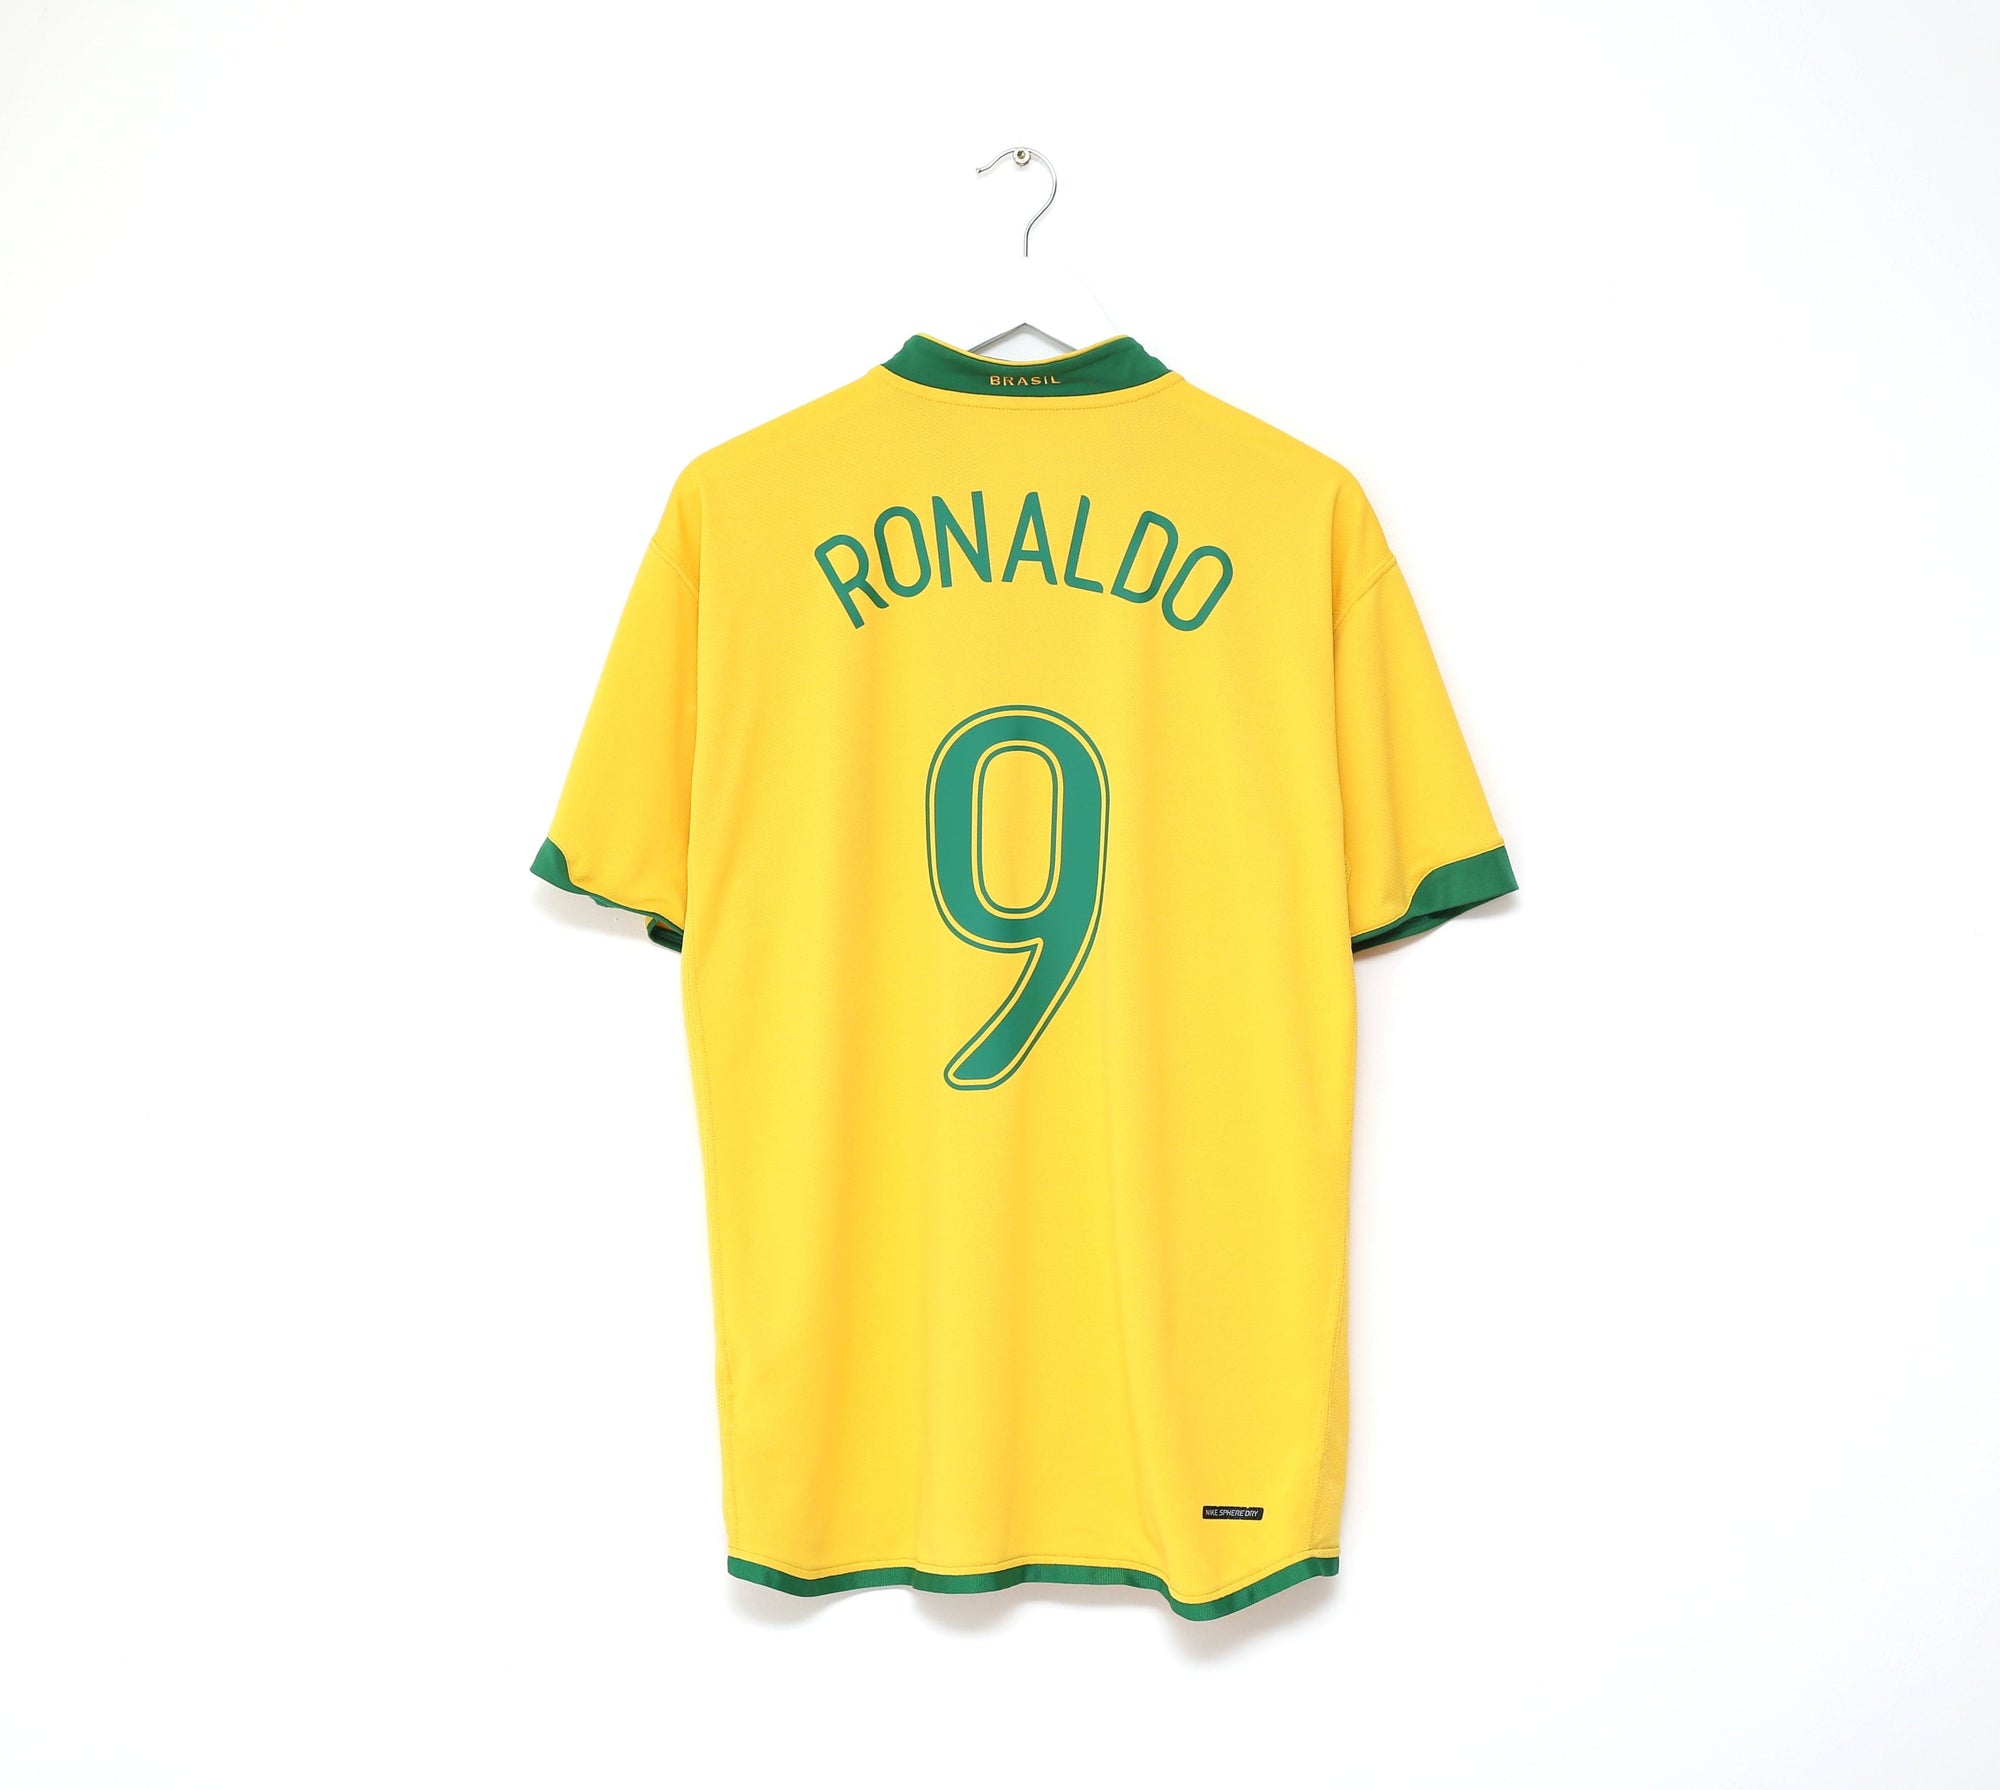 Gremio 2010 Soccer Futebol Football Jersey #10 Douglas XL Brasil Brazil  Kimbo